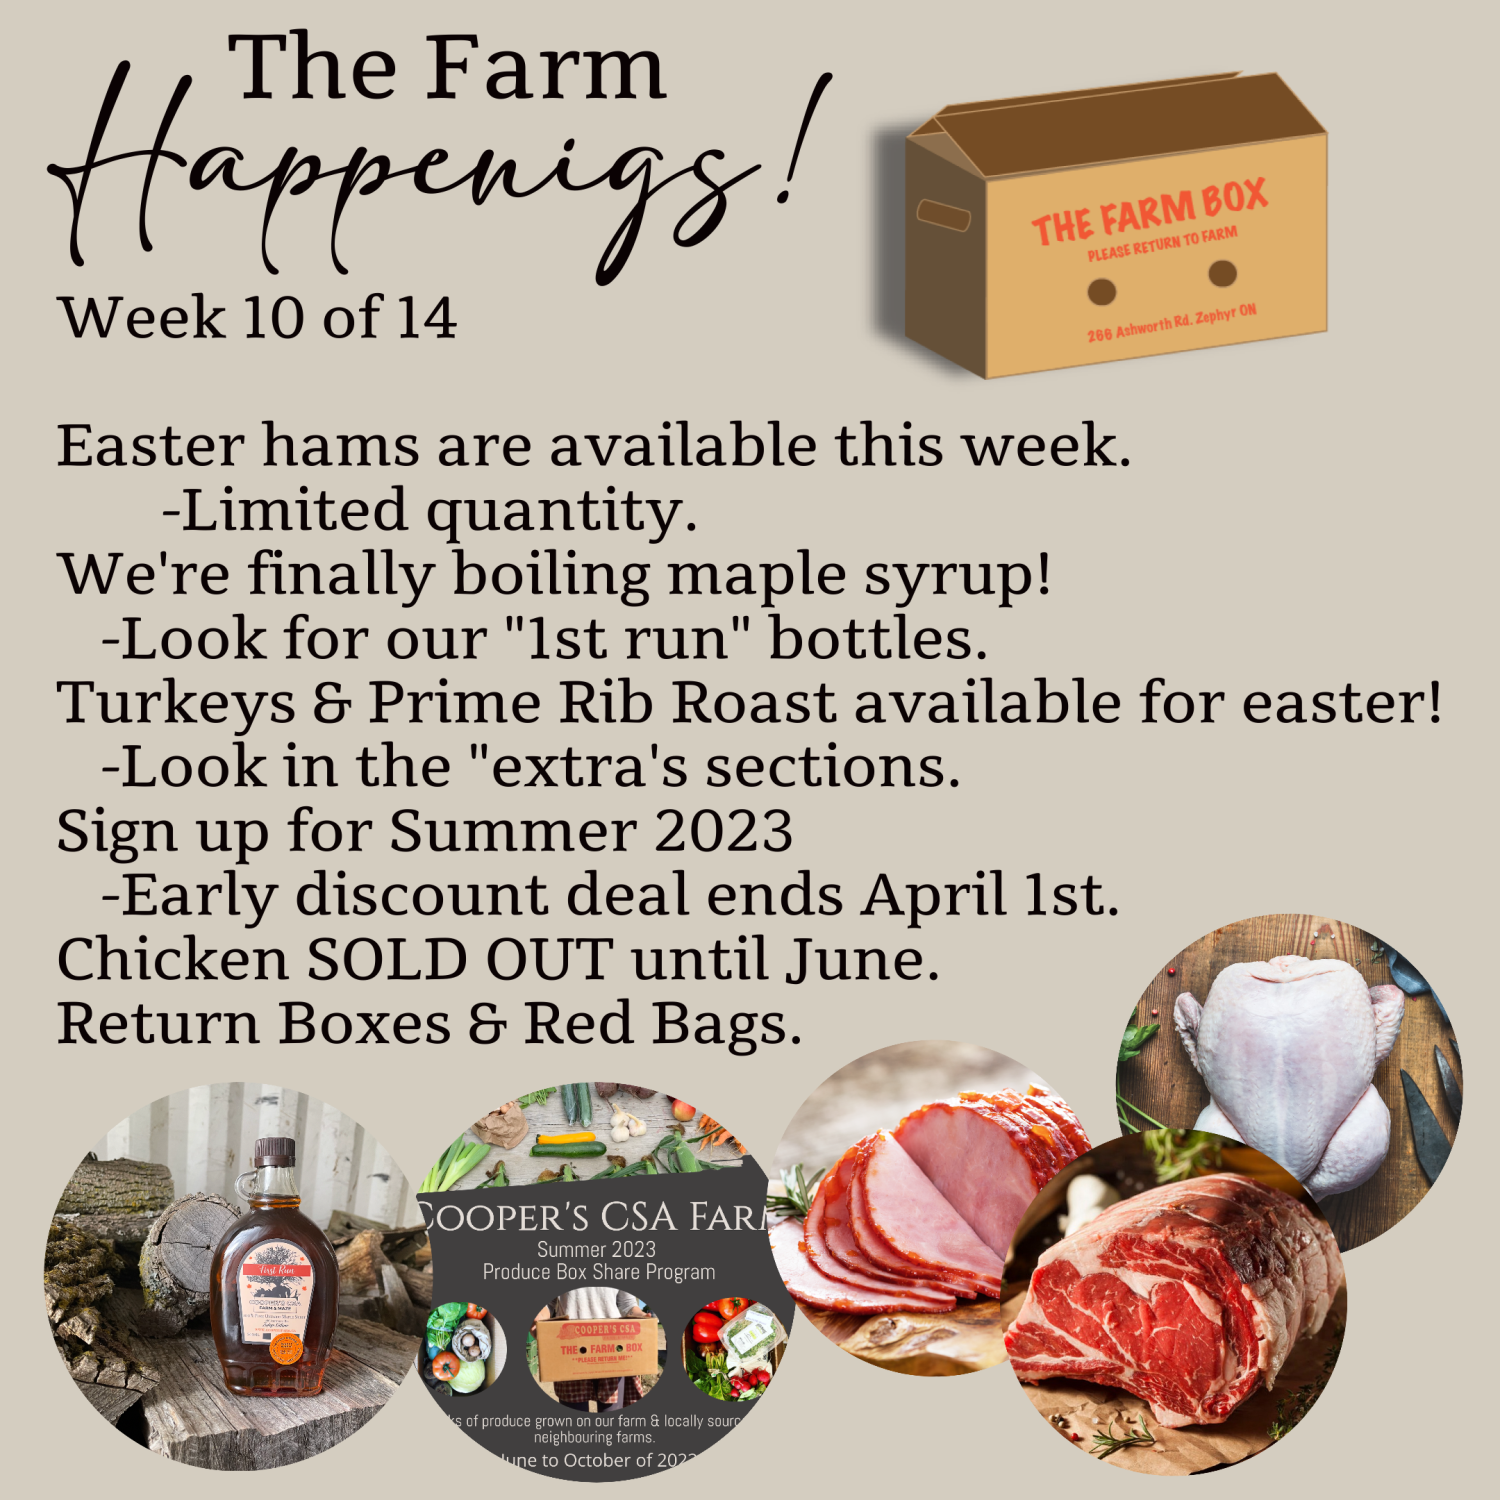 Next Happening: "The Farm Box"-Coopers CSA Farm Farm Happenings Week 10